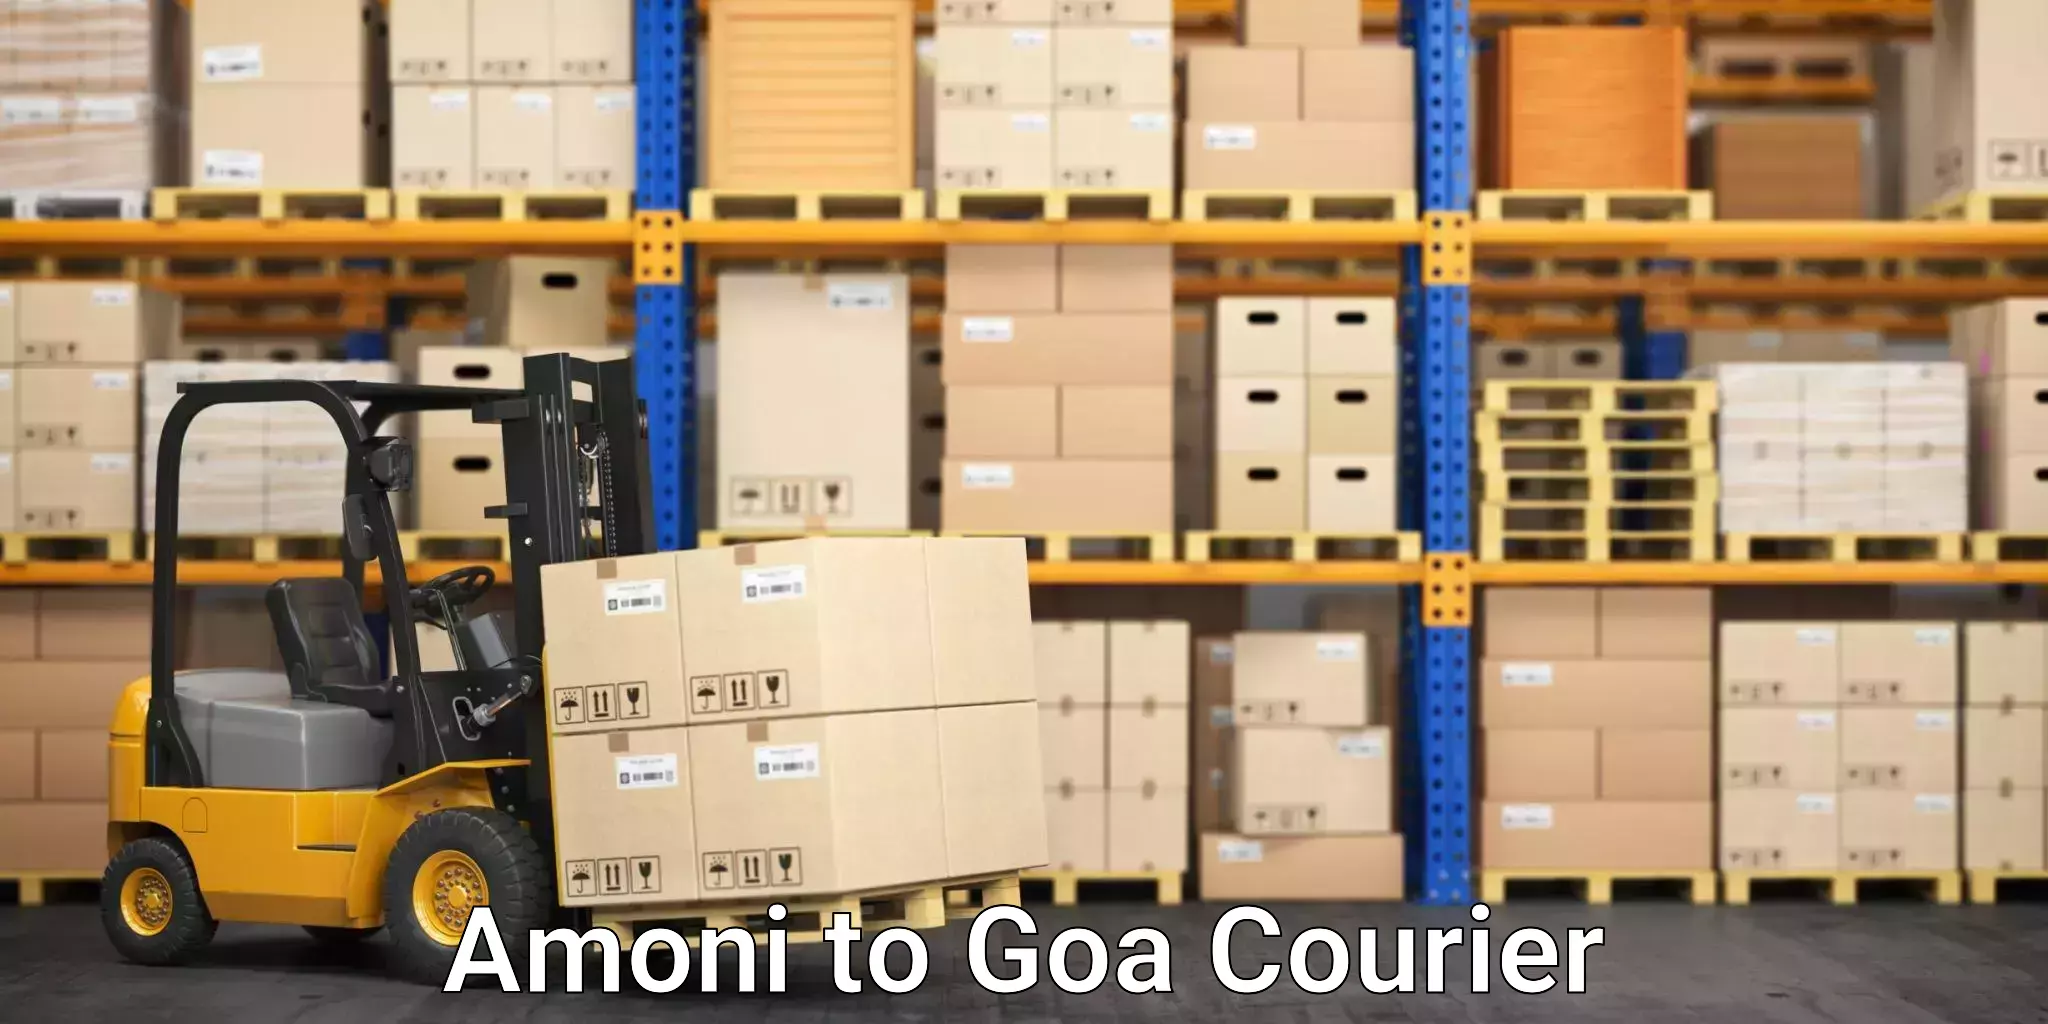 Courier service innovation Amoni to Goa